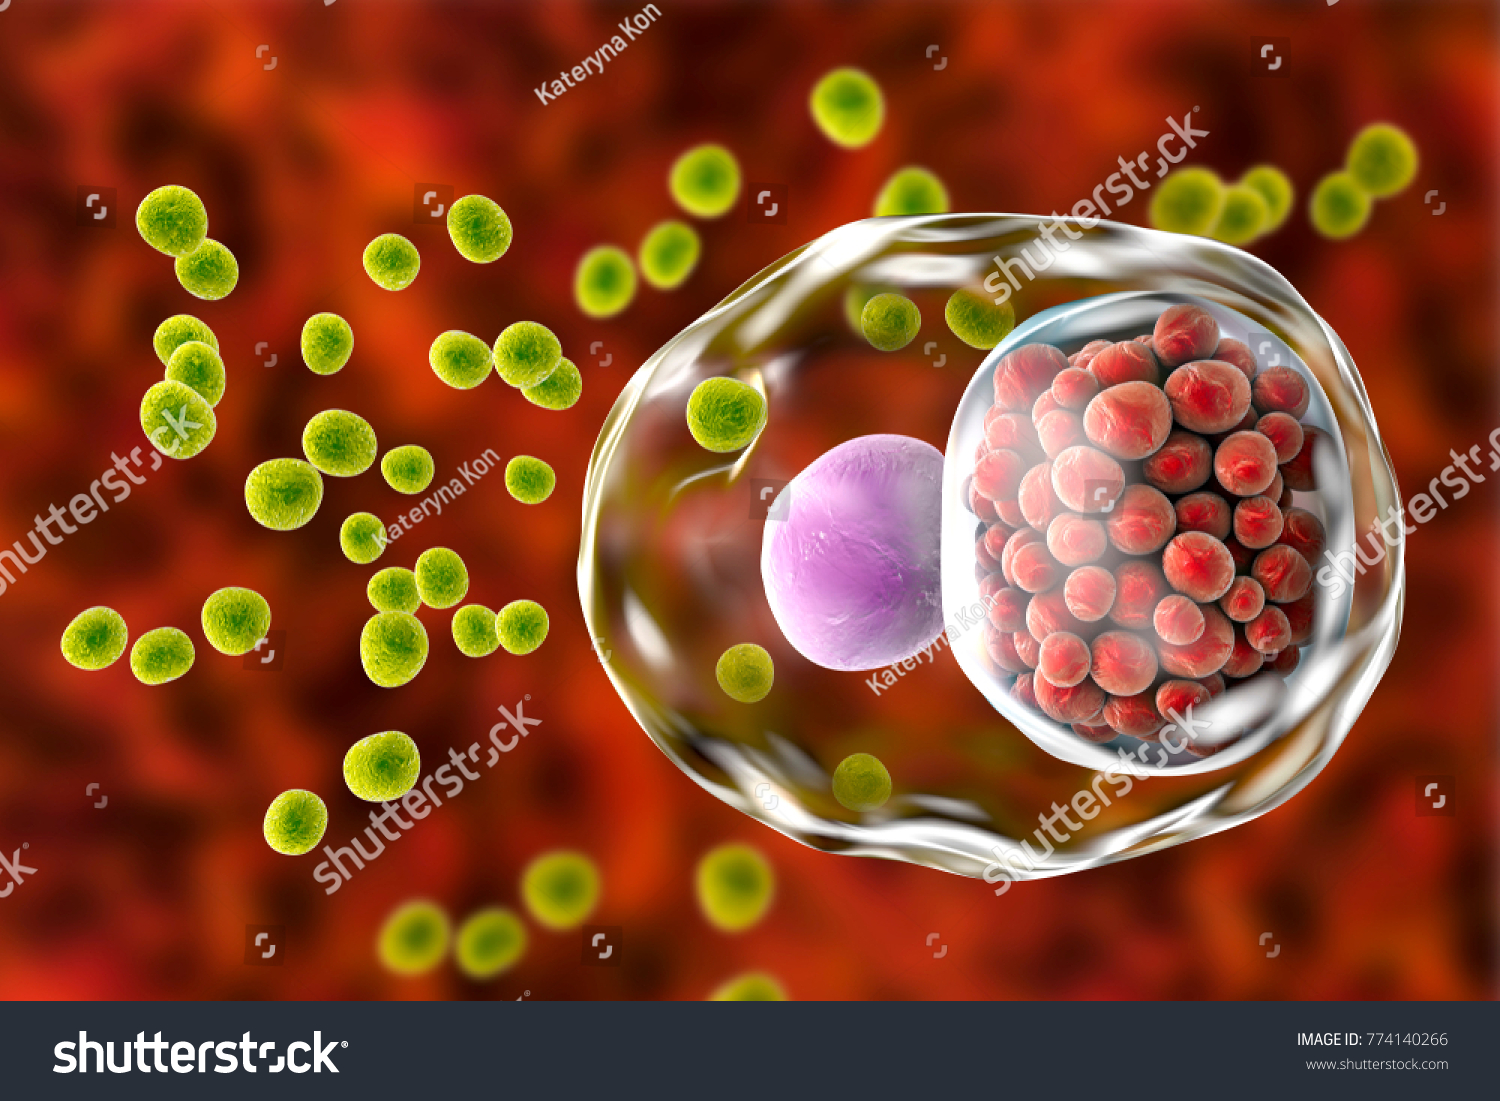 Chlamydia Trachomatis Bacteria 3d Illustration Showing Stock Illustration 774140266 Shutterstock 2036